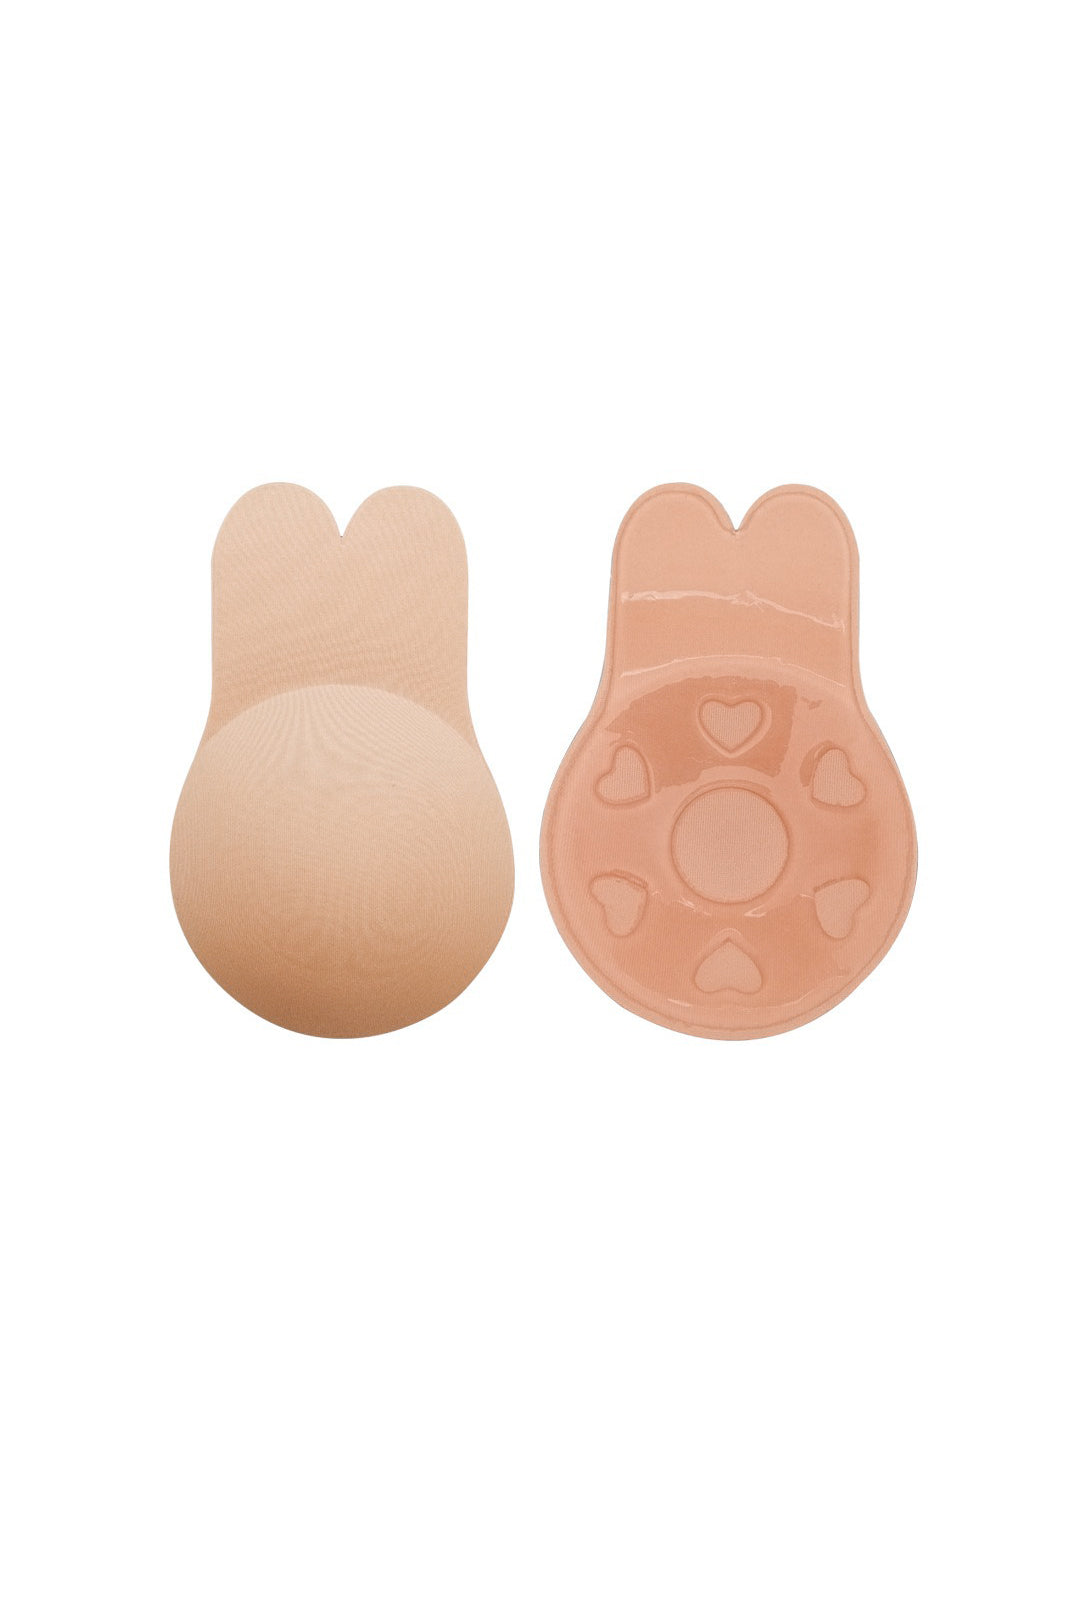 Bunny Ear Design Nipple Cover